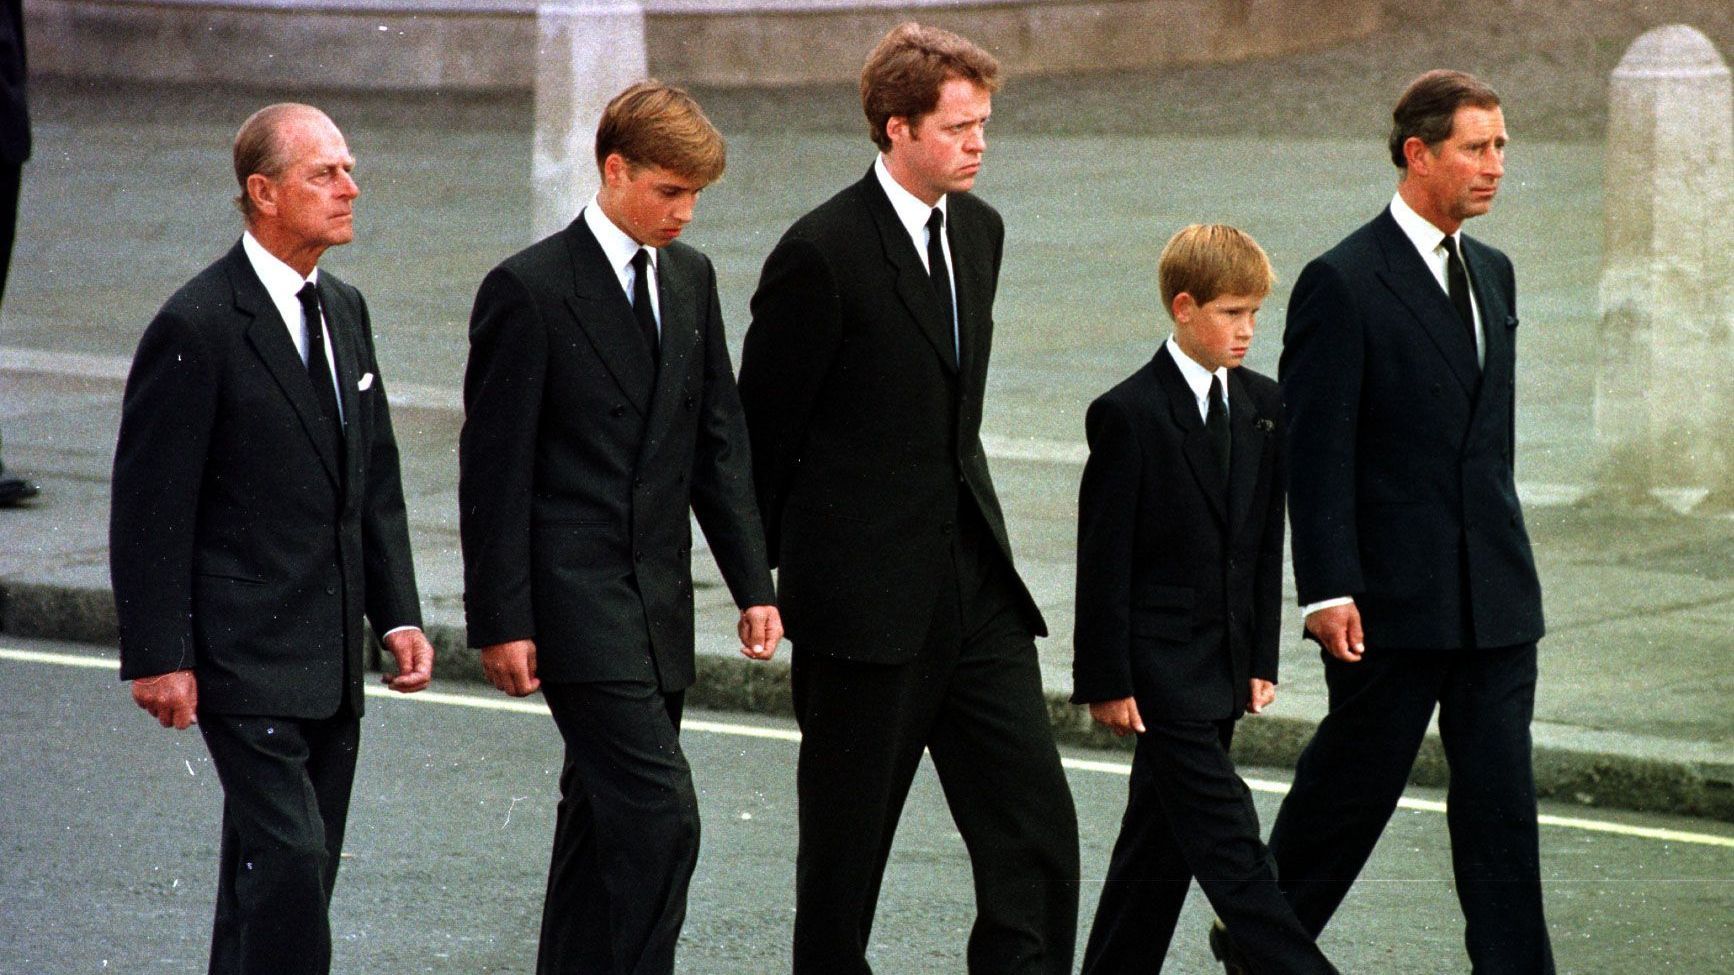 v.l.: Prinz Philip, Prinz William, Earl Althorp, Prinz Harry und Prinz Charles beim Trauerzug von Lady Diana.